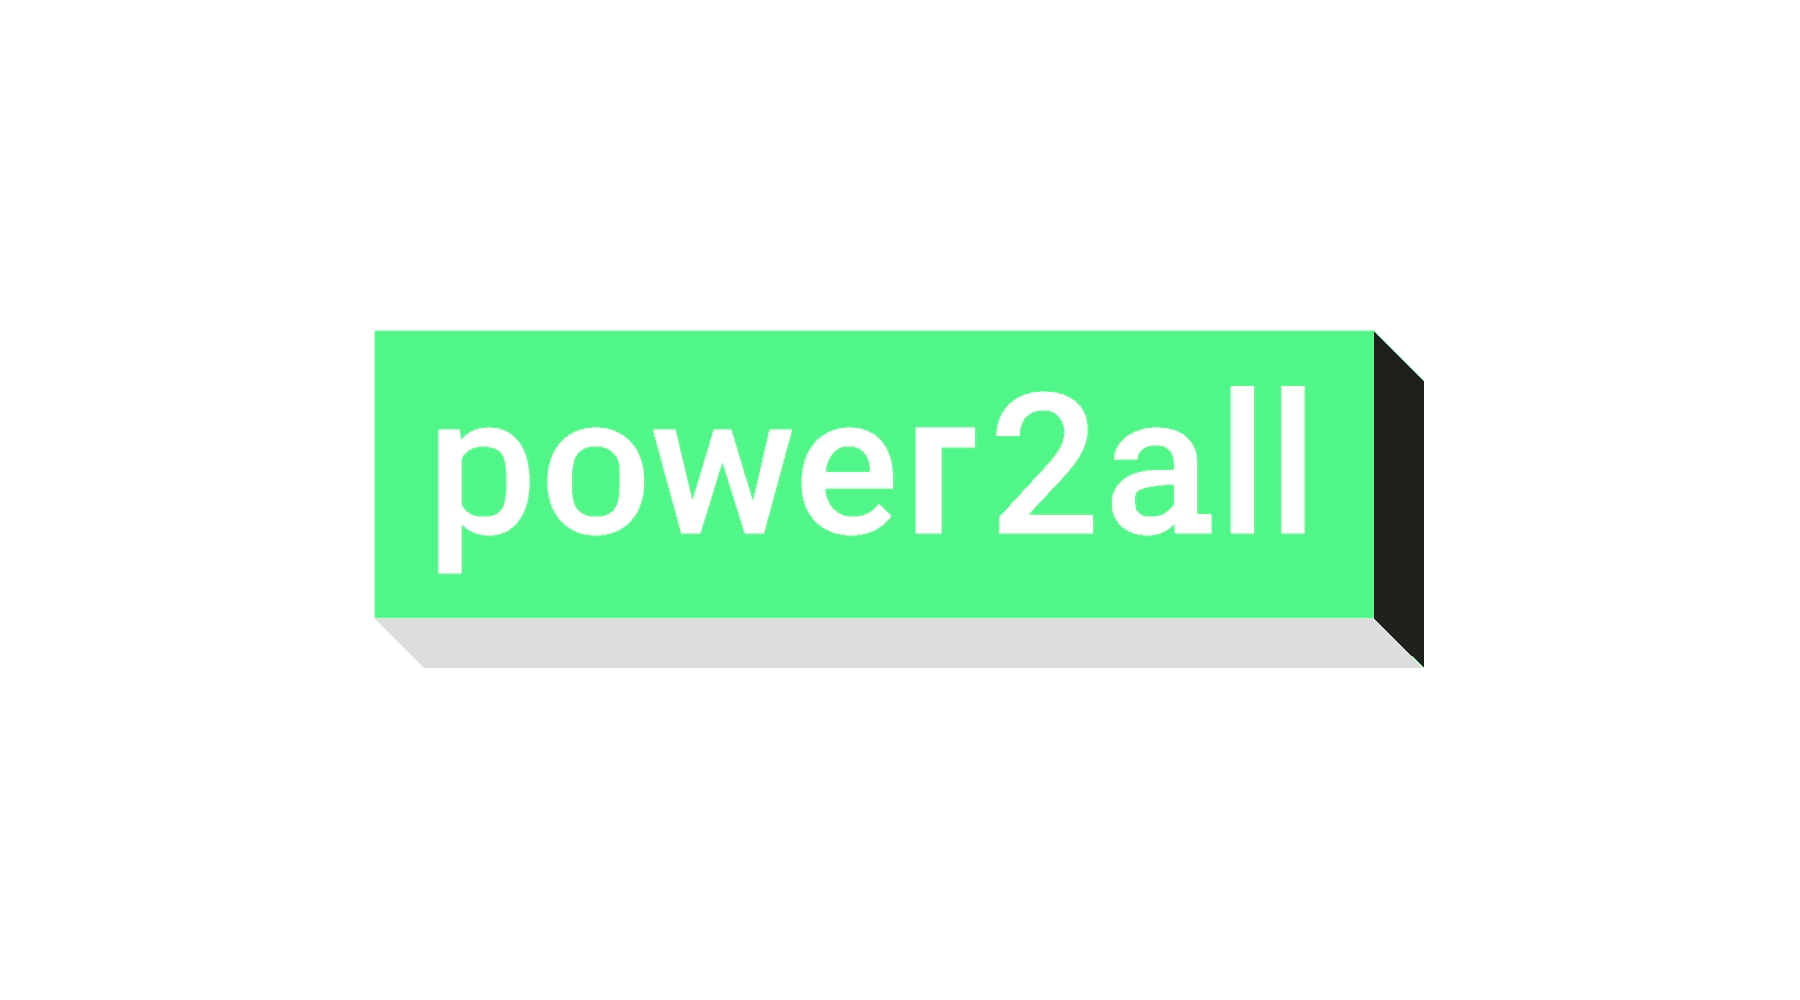 Power2all logo button animation